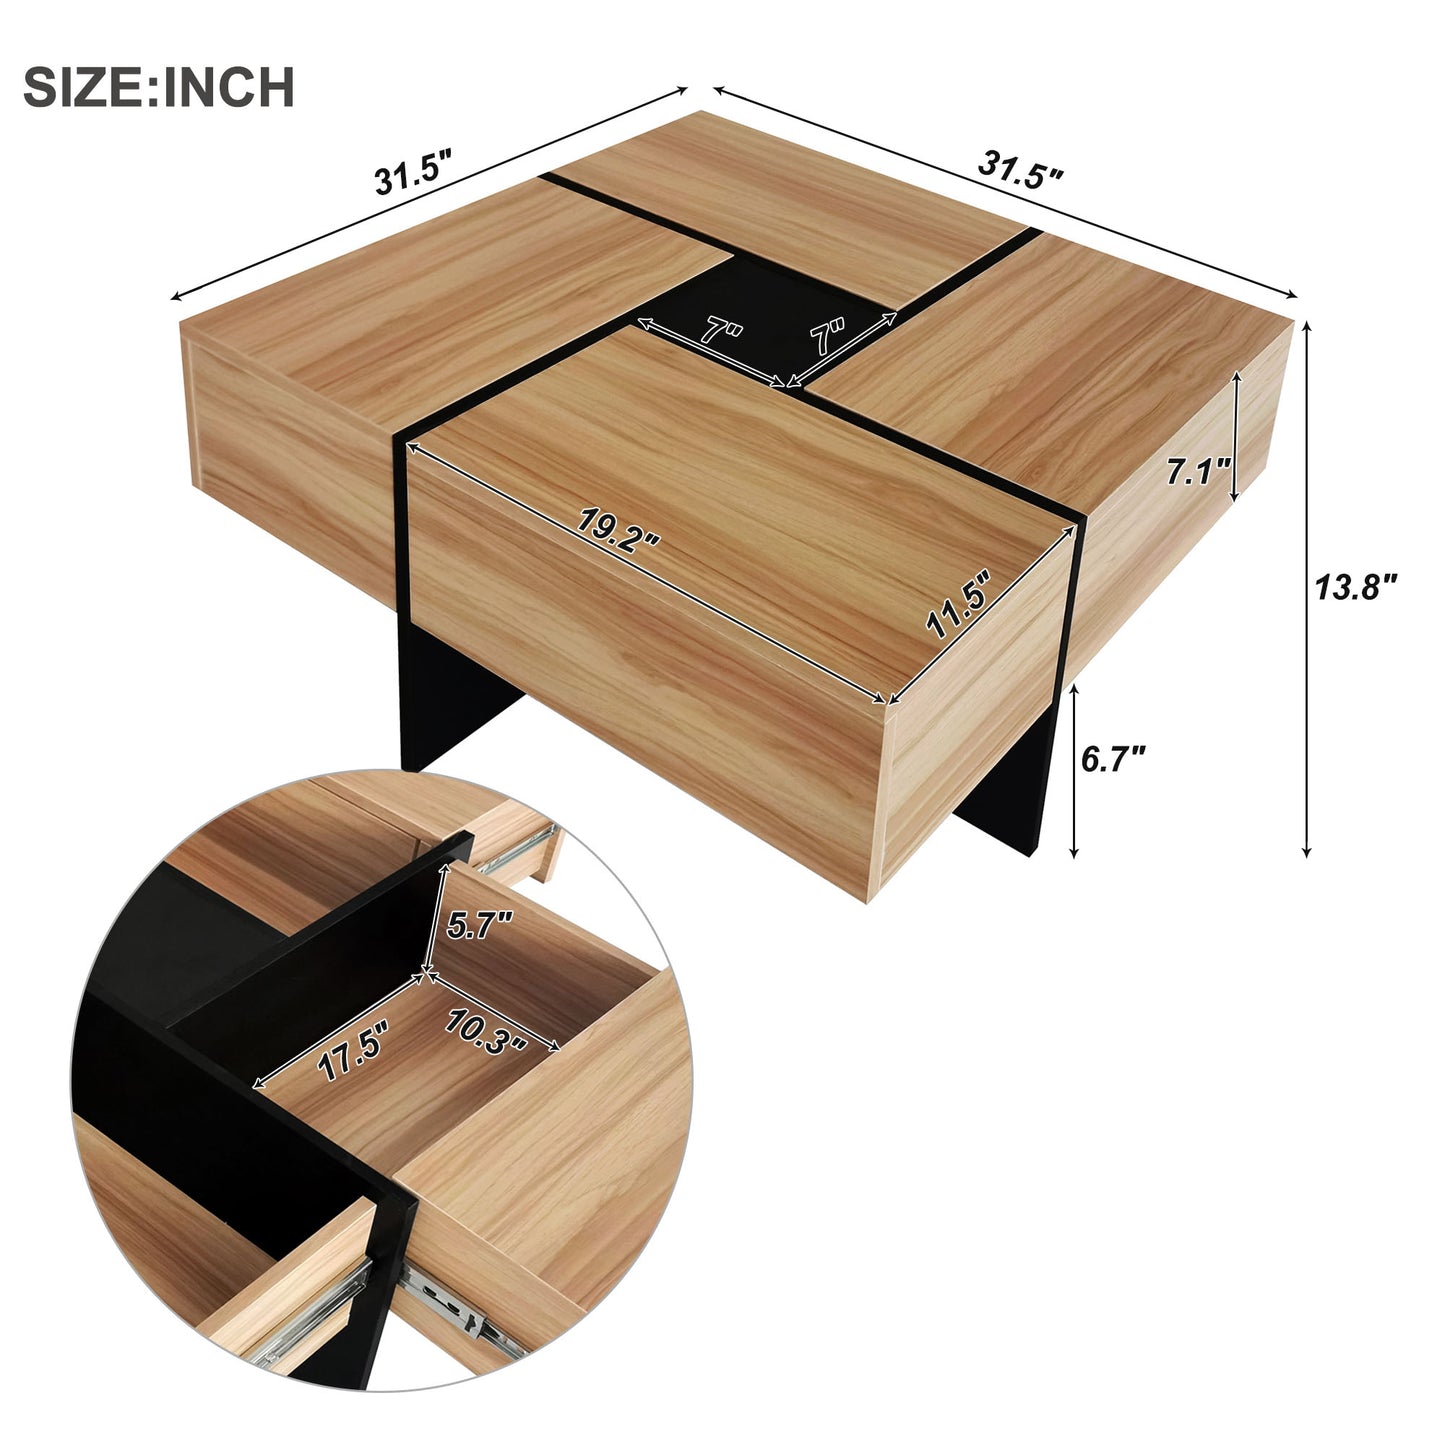 Unique Design Coffee Table with 4 Hidden Storage Compartments